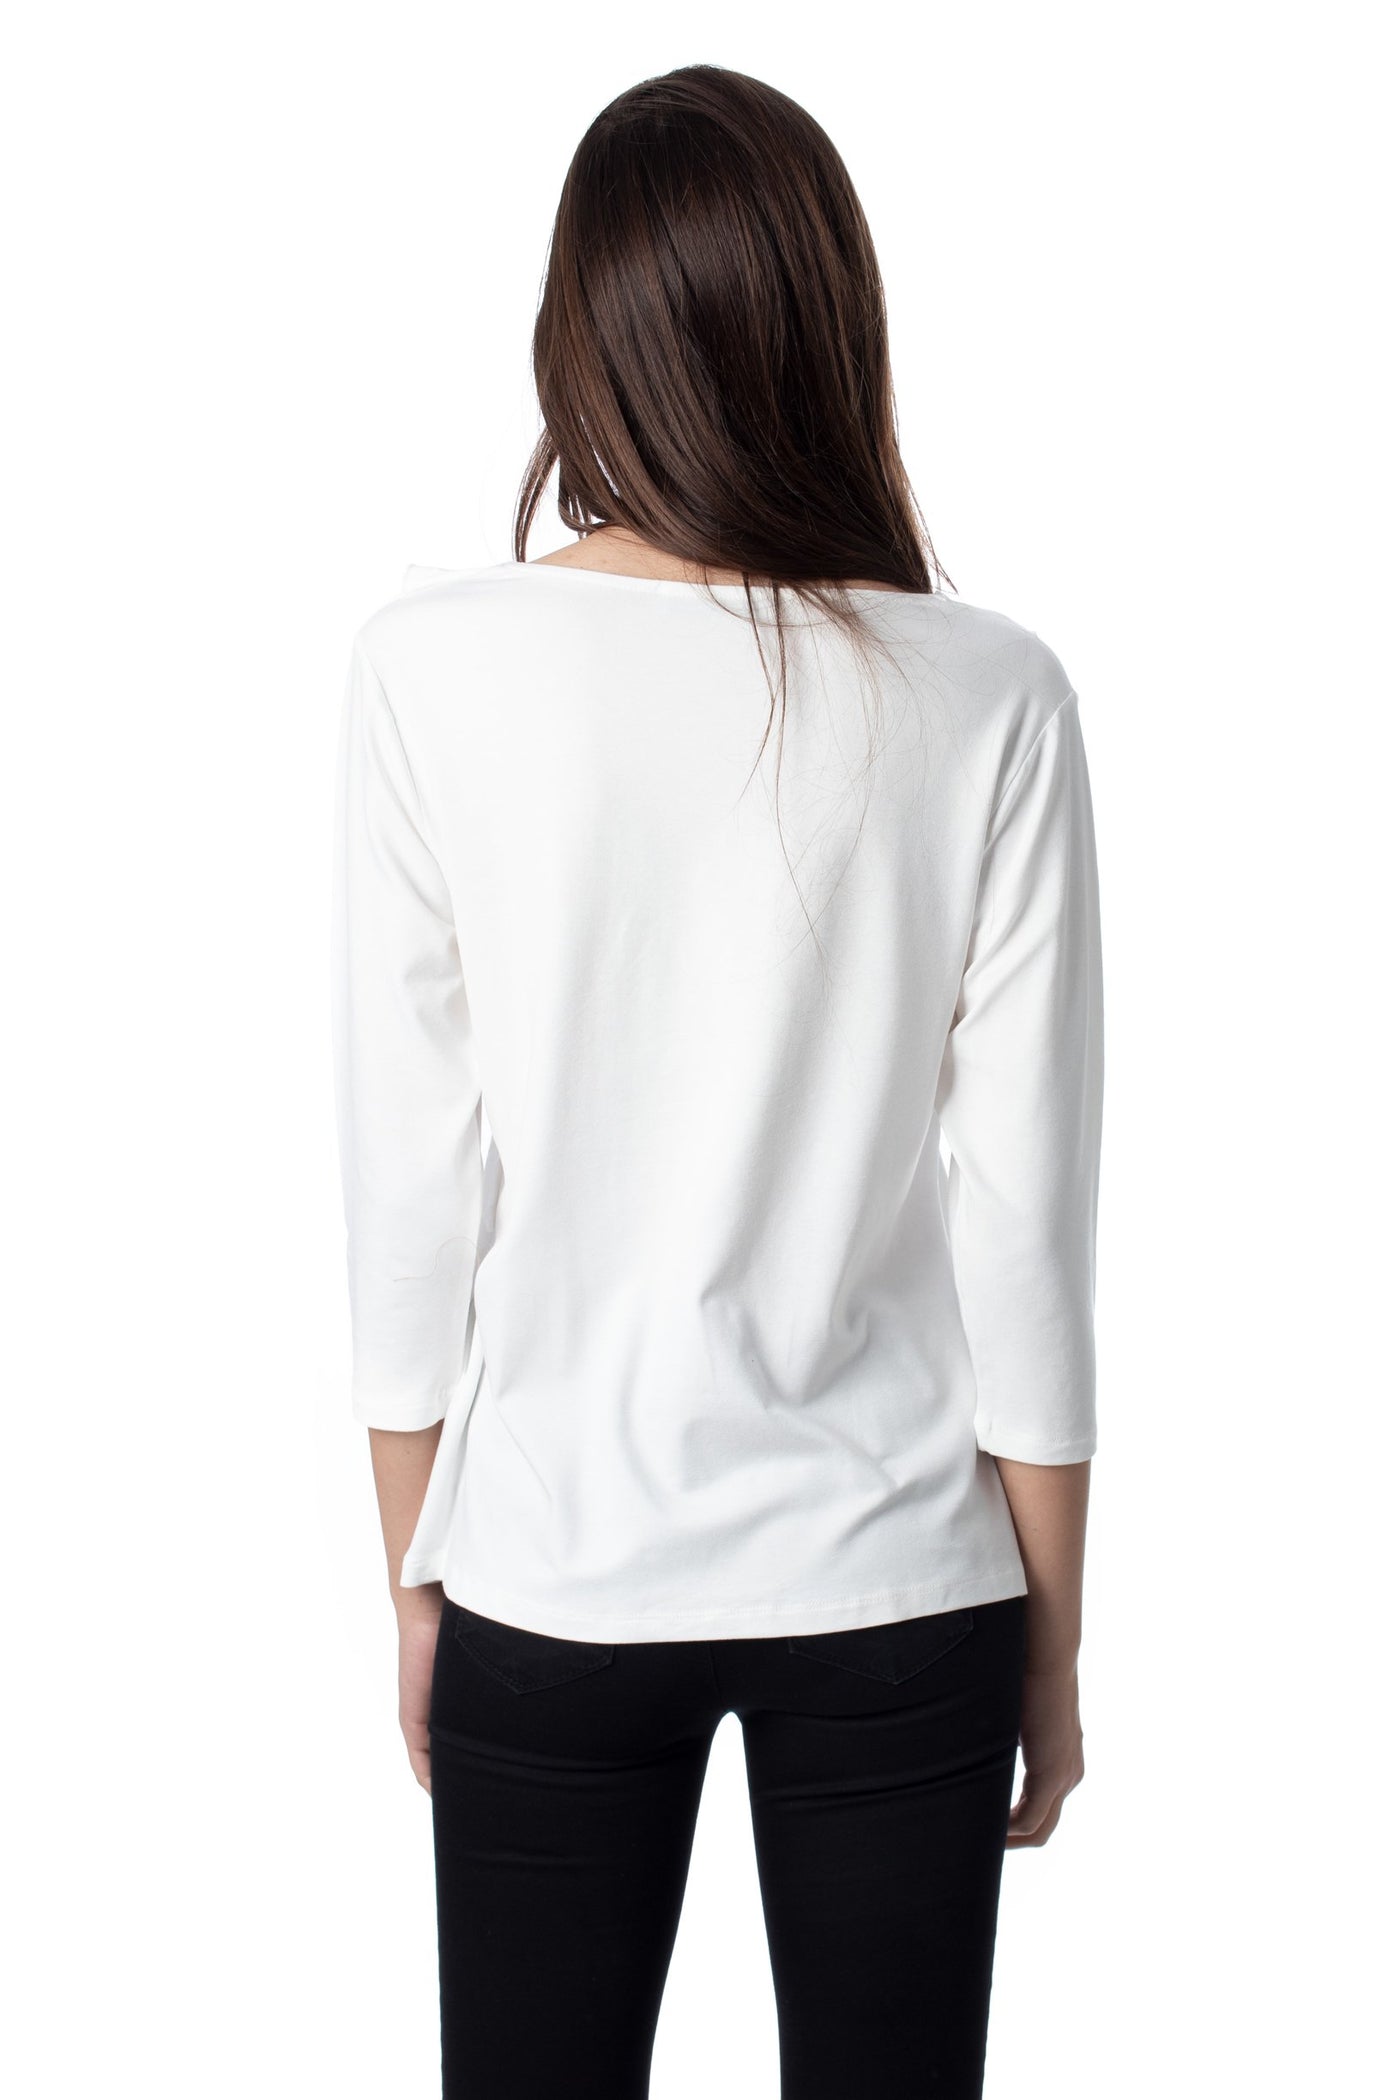 chassca frilled V-neck 3/4 sleeve blouse - Breakmood